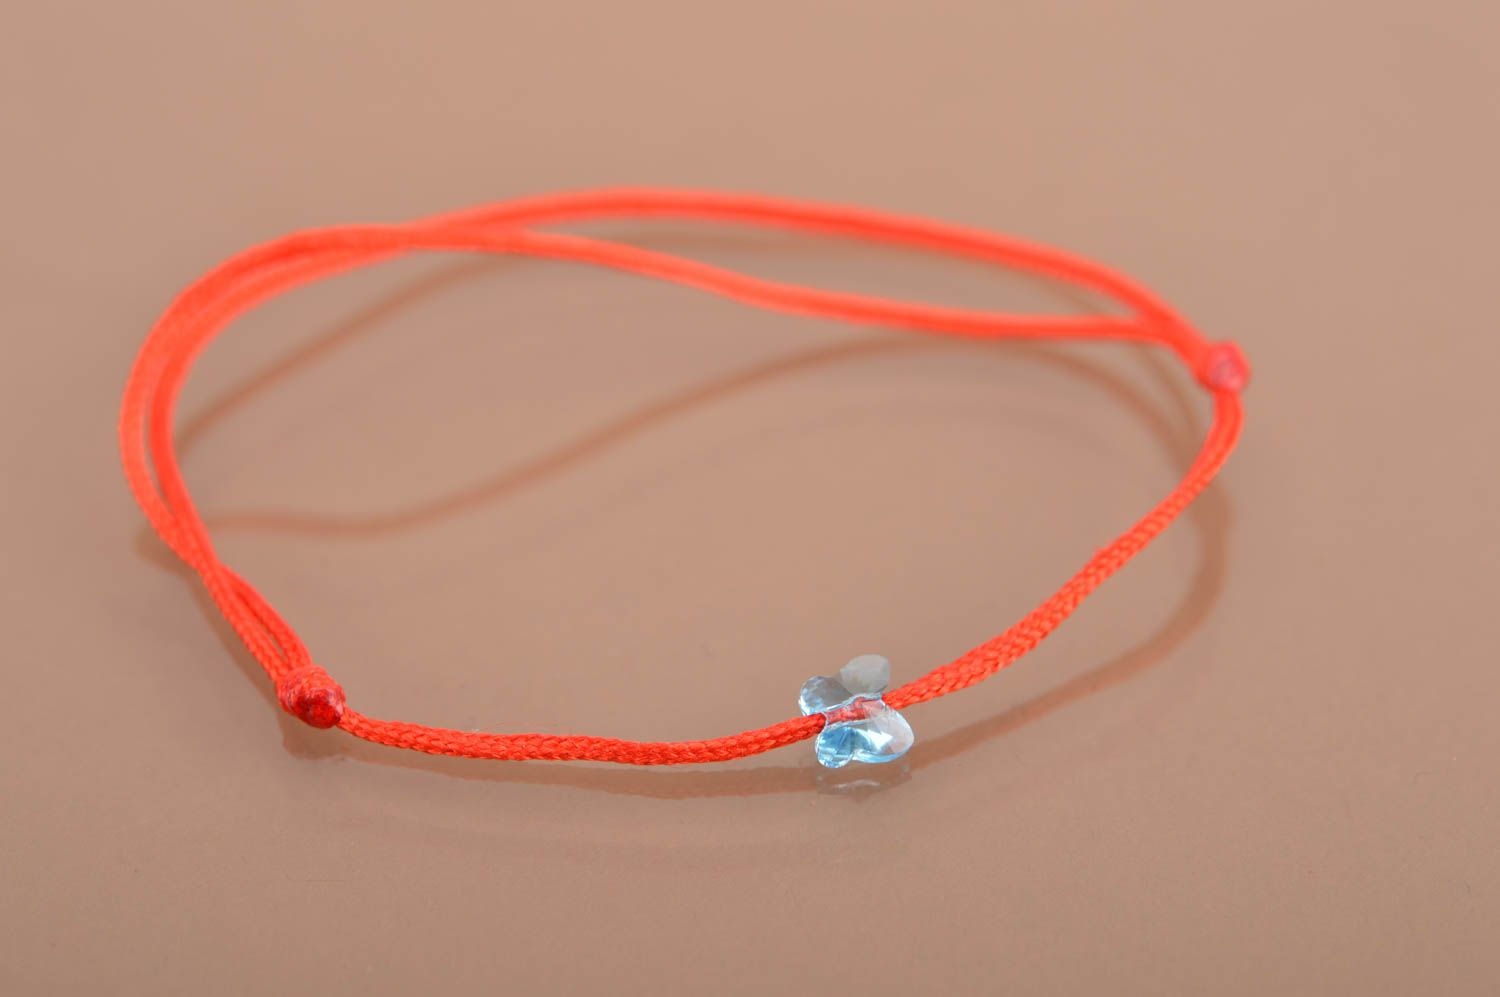 Unusual handmade string bracelet friendship bracelet designs textile jewelry photo 2